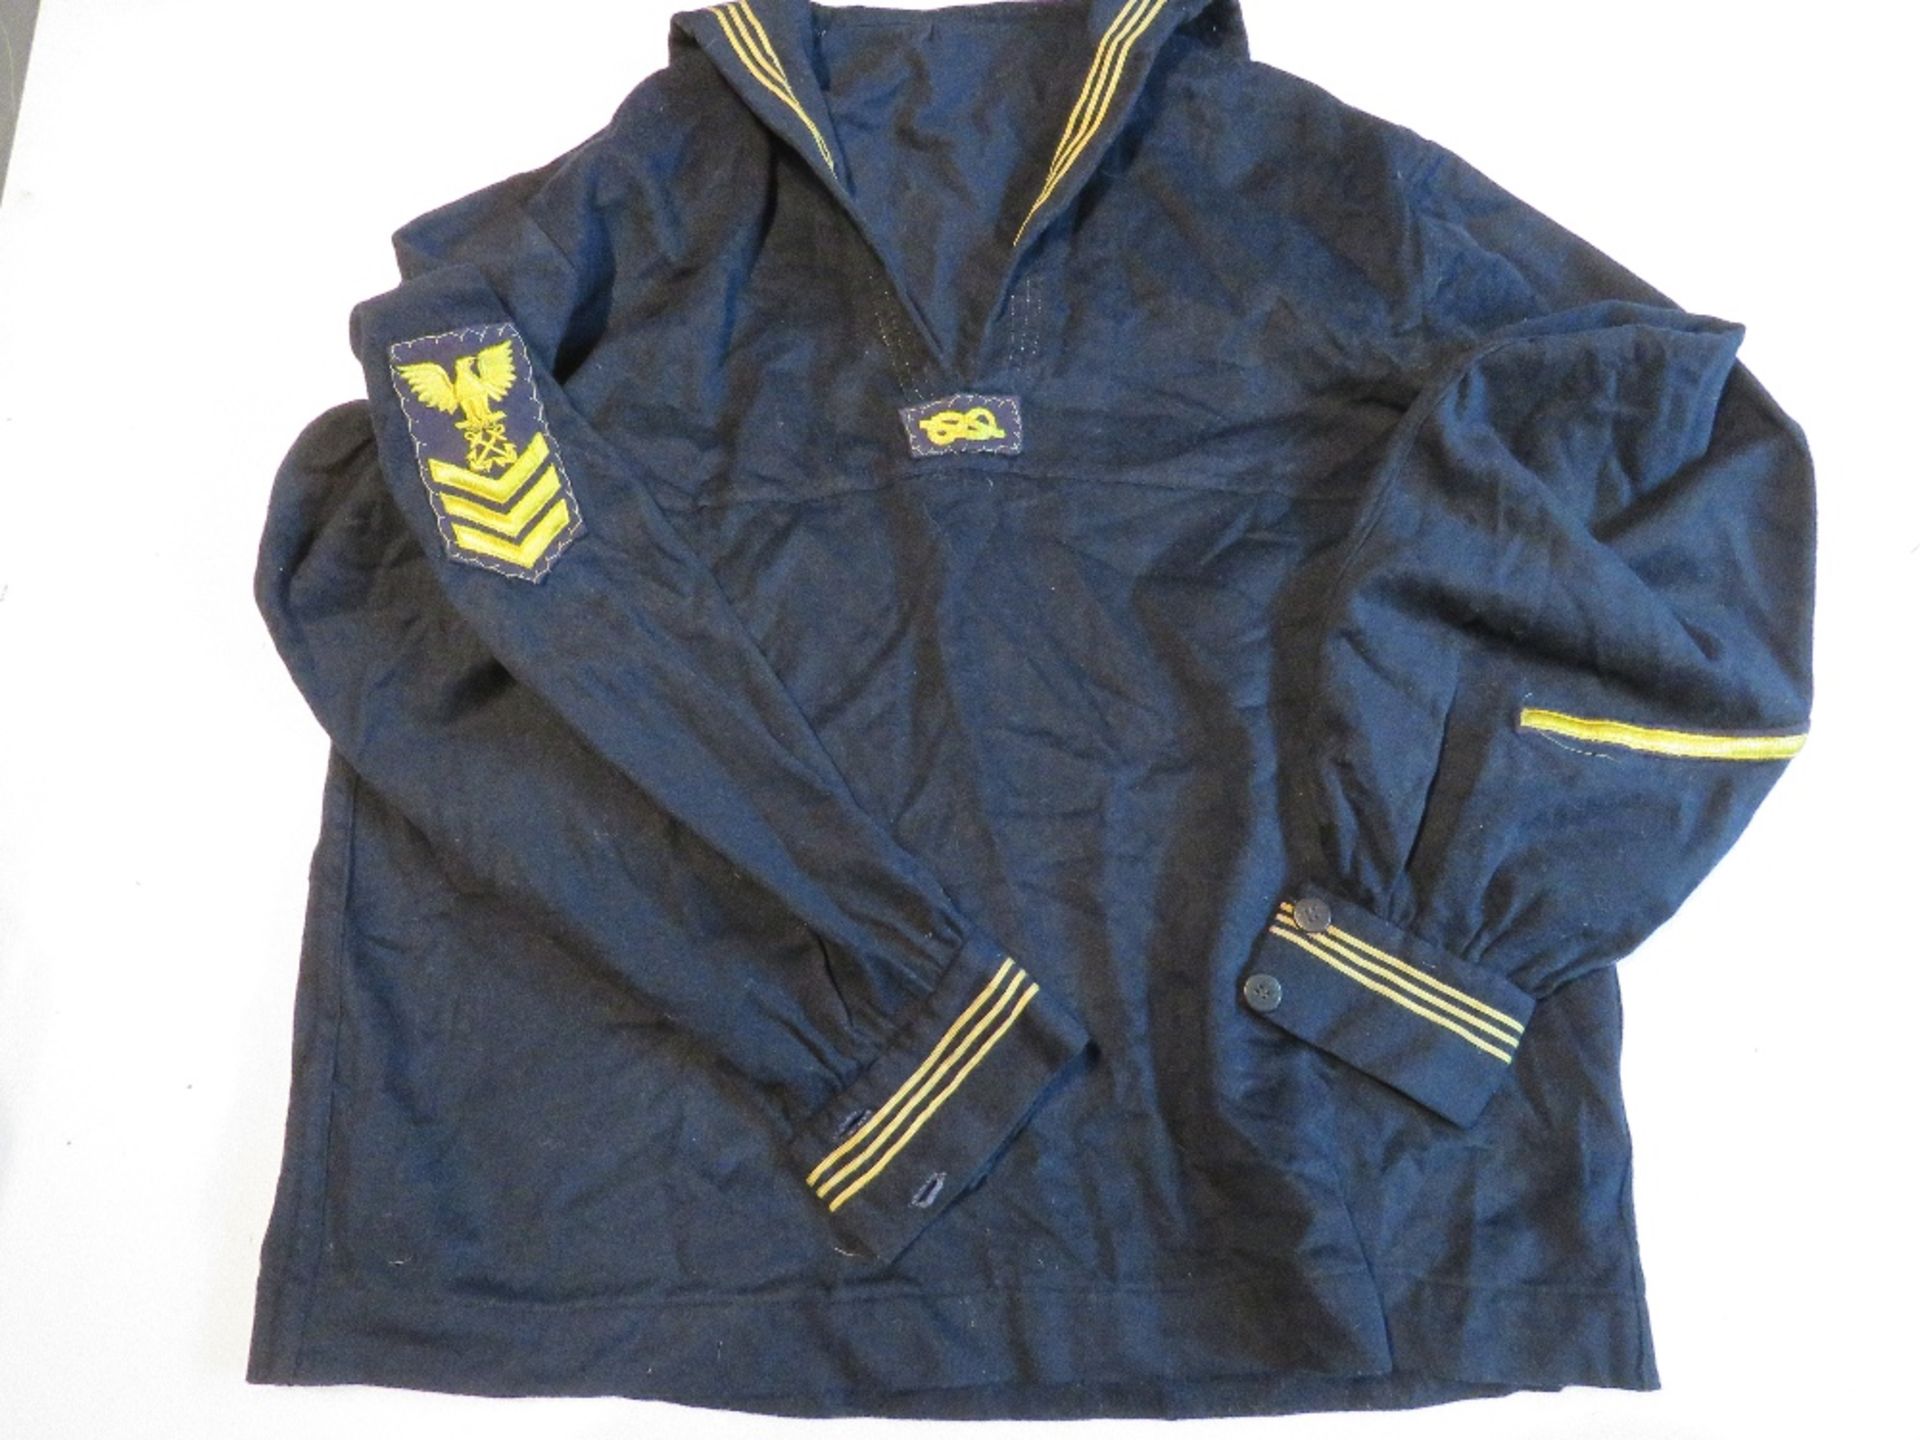 A US wool jacket size medium, a US Air Force shirt, US Navy shirt with Bars, - Image 3 of 4